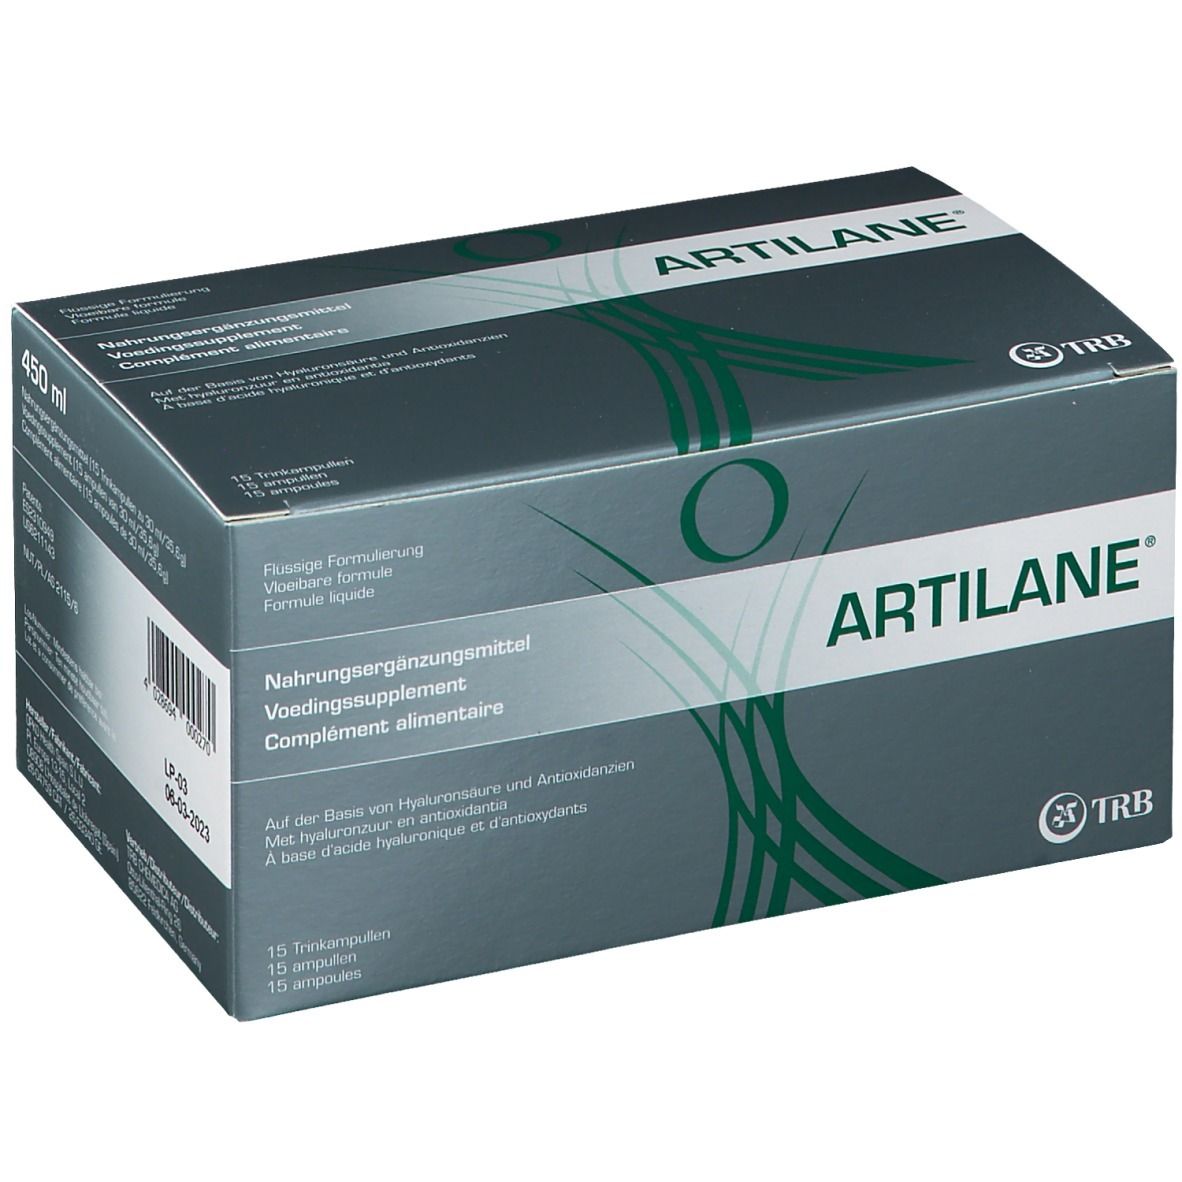 Artilane® Trinkampullen